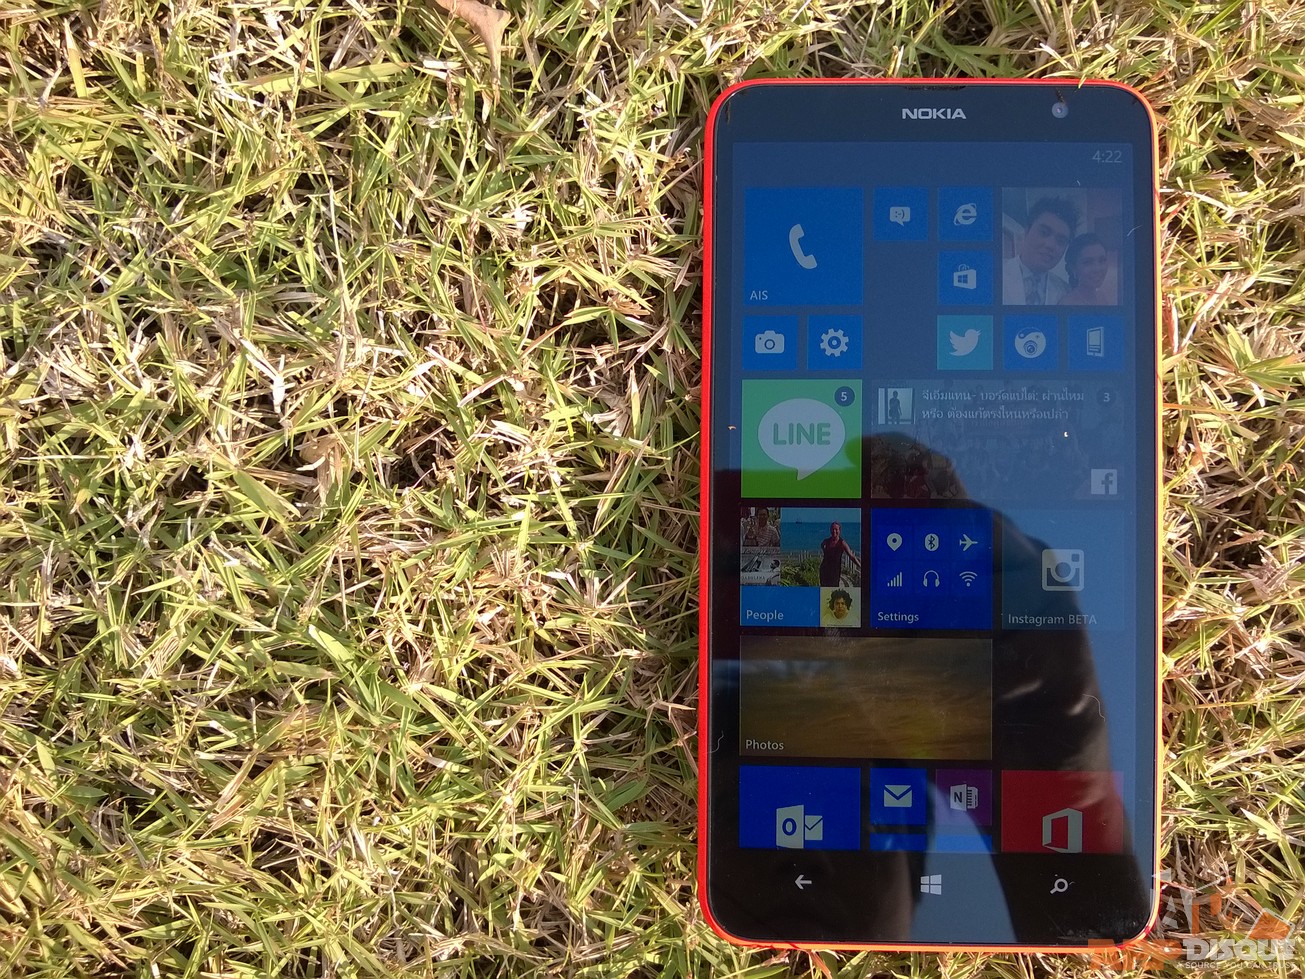 WP 20140223 16 20 35 Pro | Lumia 1320 screen | หน้าจอใหญ่เต็มตา สีสันสดใส จุดเด่นของของ Nokia Lumia 1320 สมาร์ทแฟ๊บเล็ตสุดคุ้มจาก Nokia